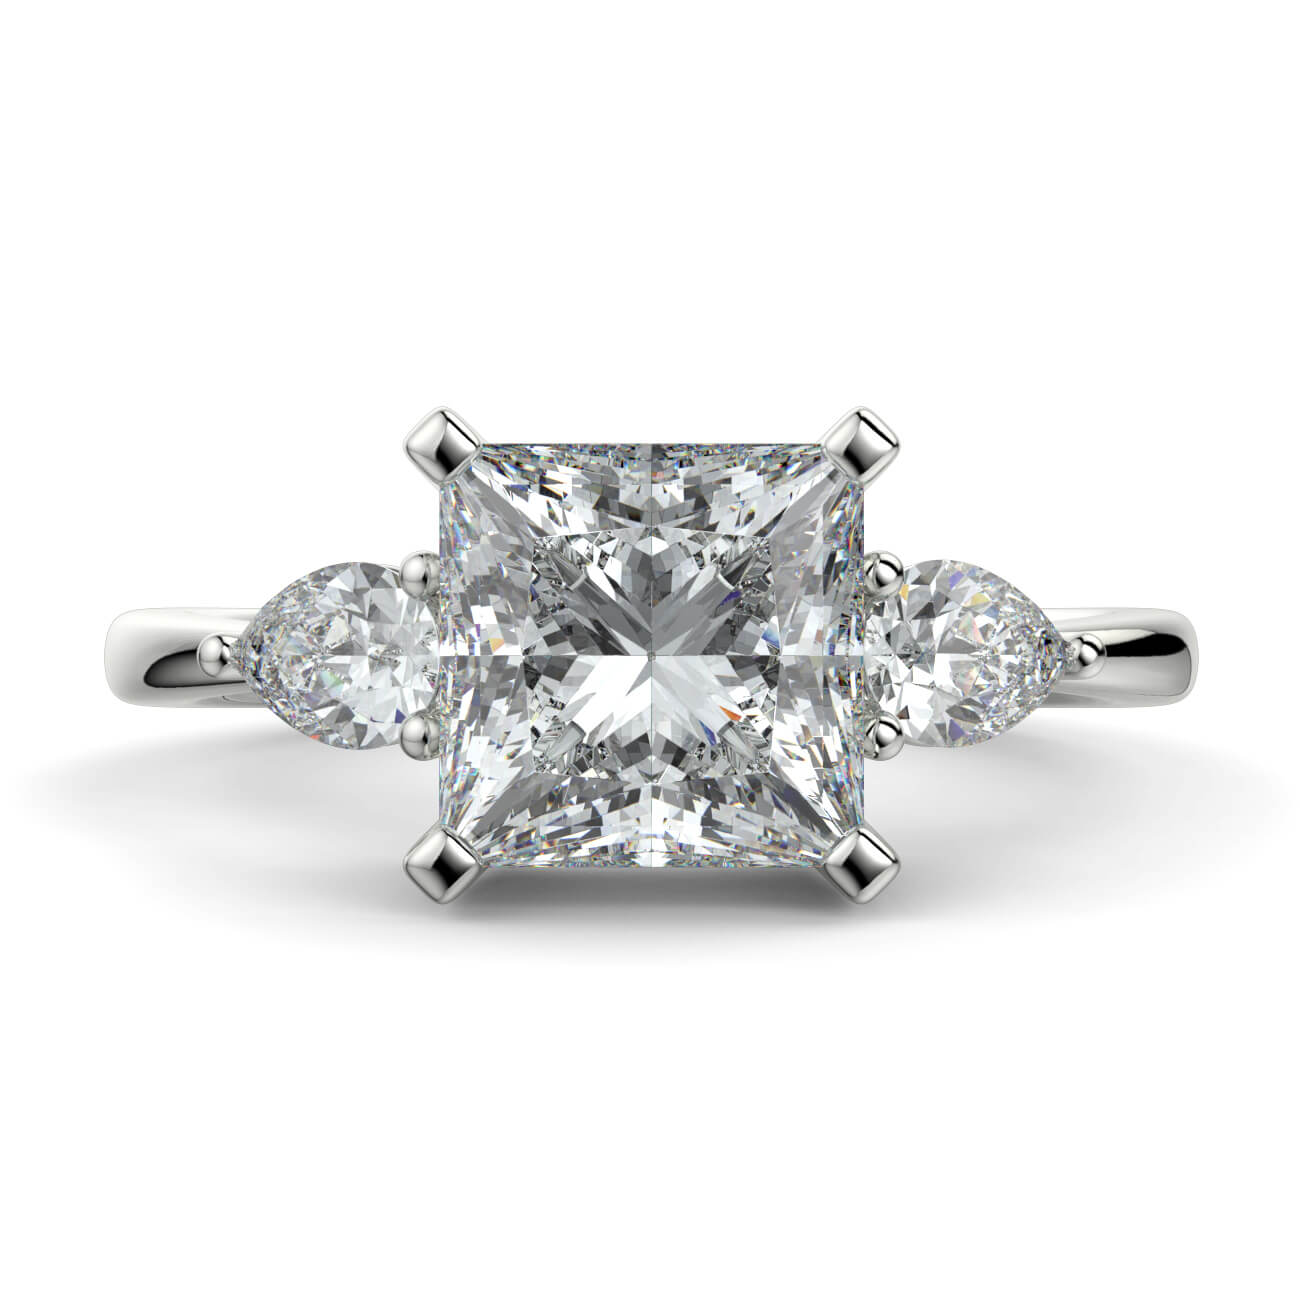 Princess Cut Diamond Ring With Pear Shape Side Diamonds In White Gold – Australian Diamond Network